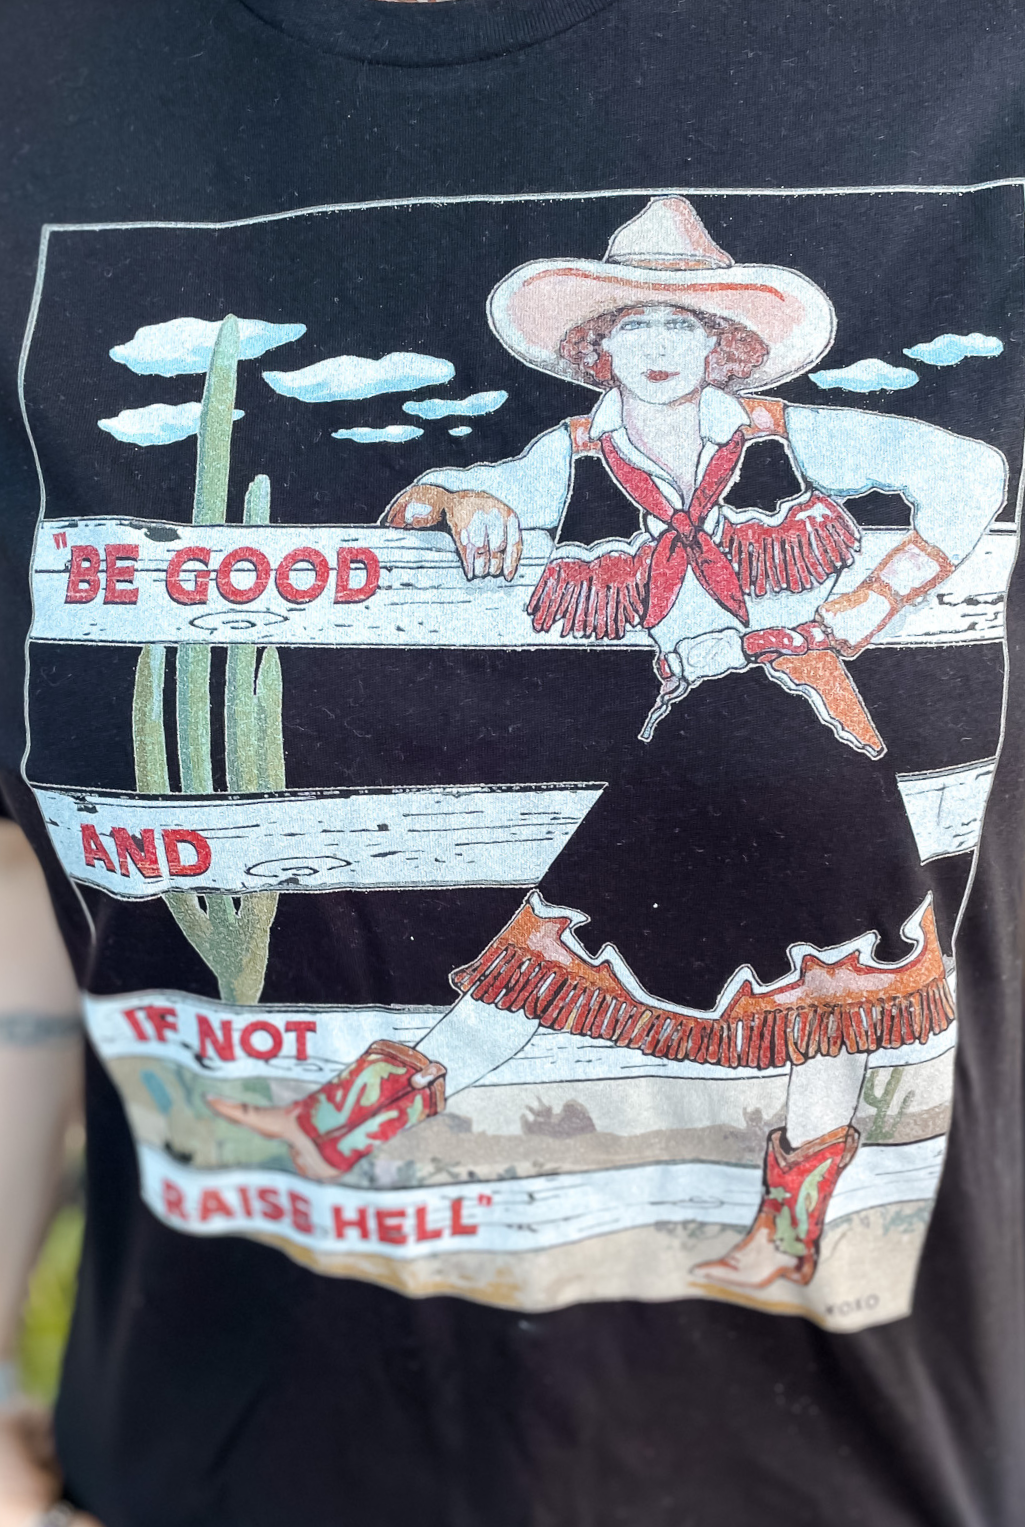 Be Good T-Shirt